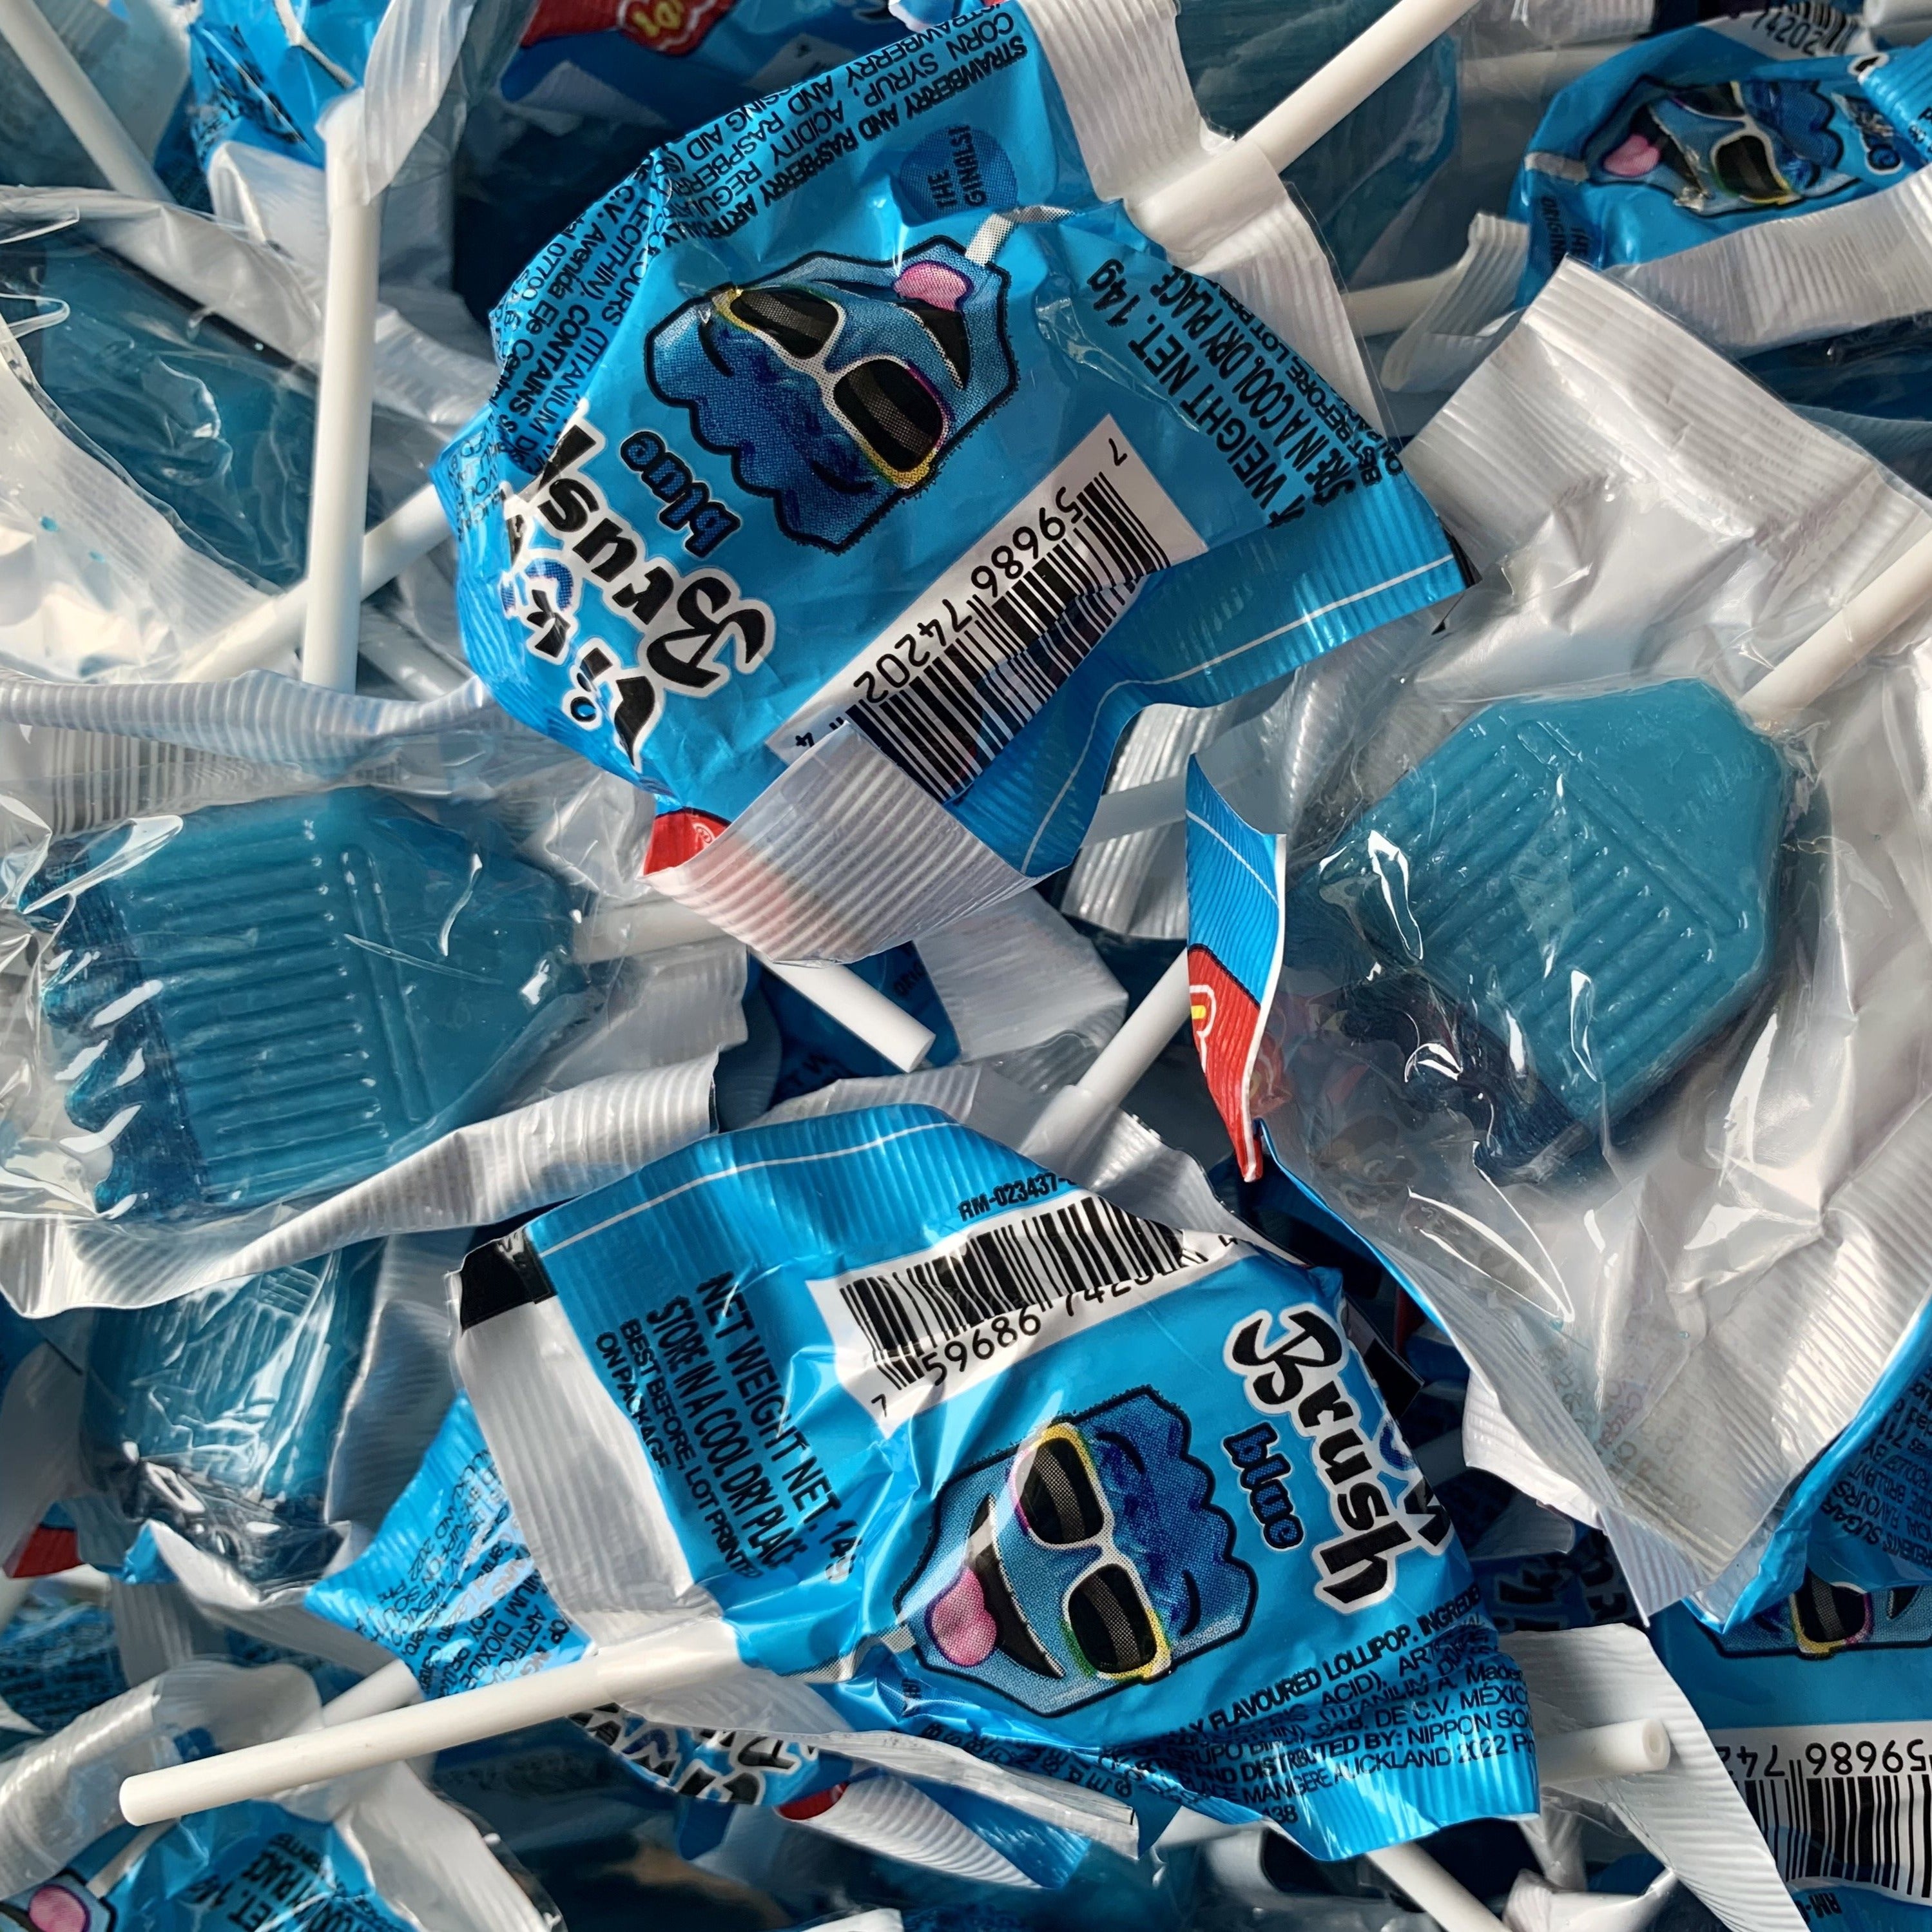 Lik-A-Brush Lollipops (Blue)